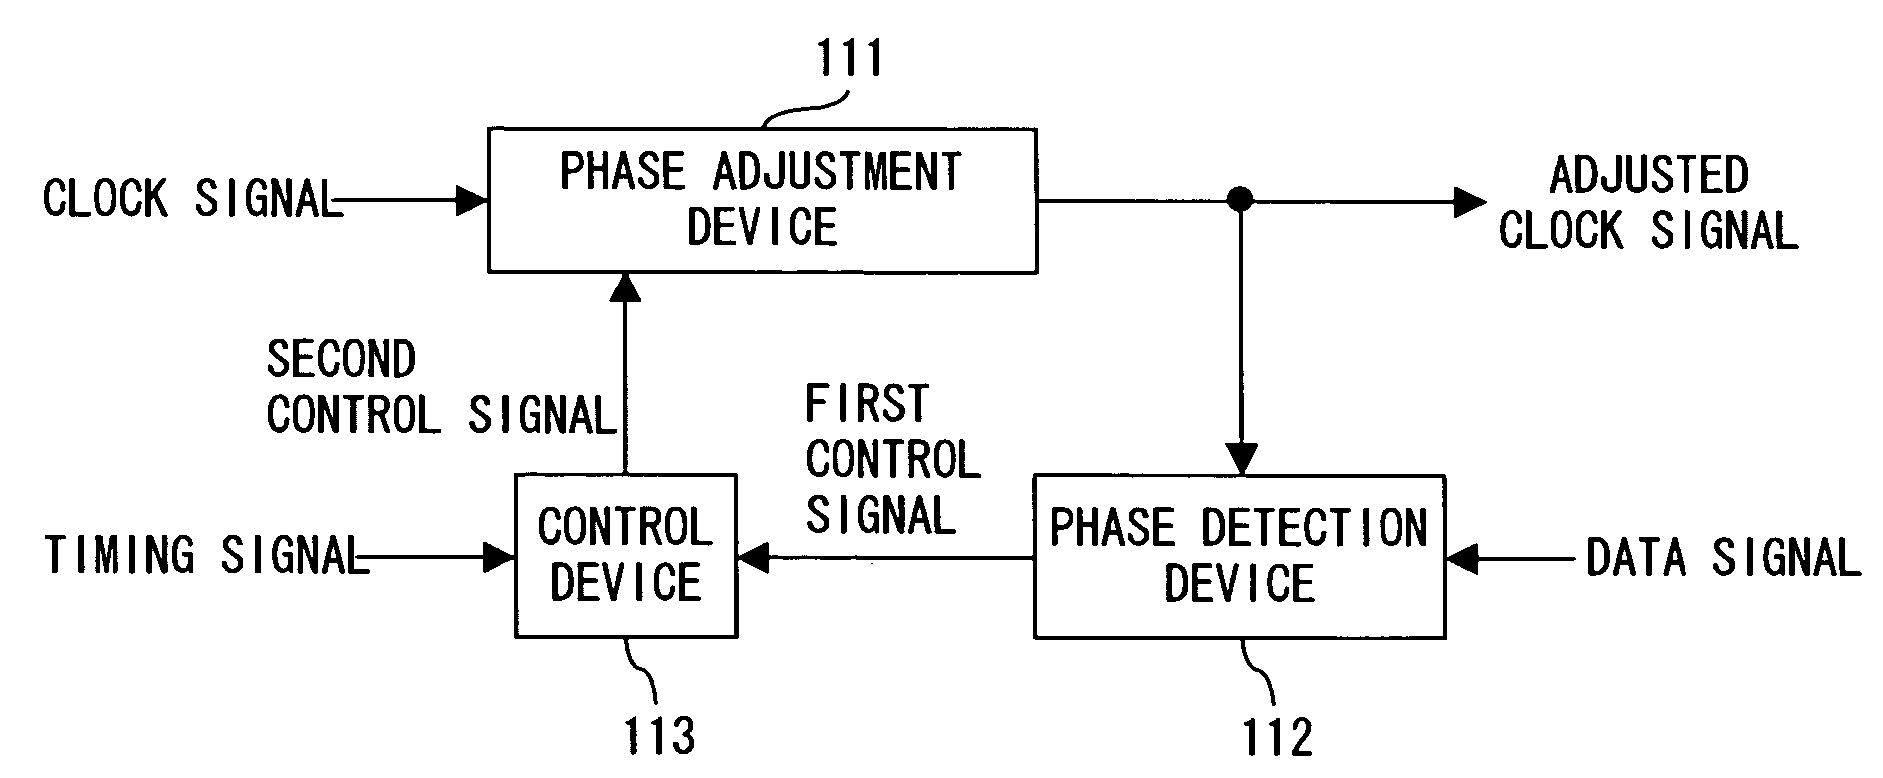 Clock adjustment apparatus and method thereof